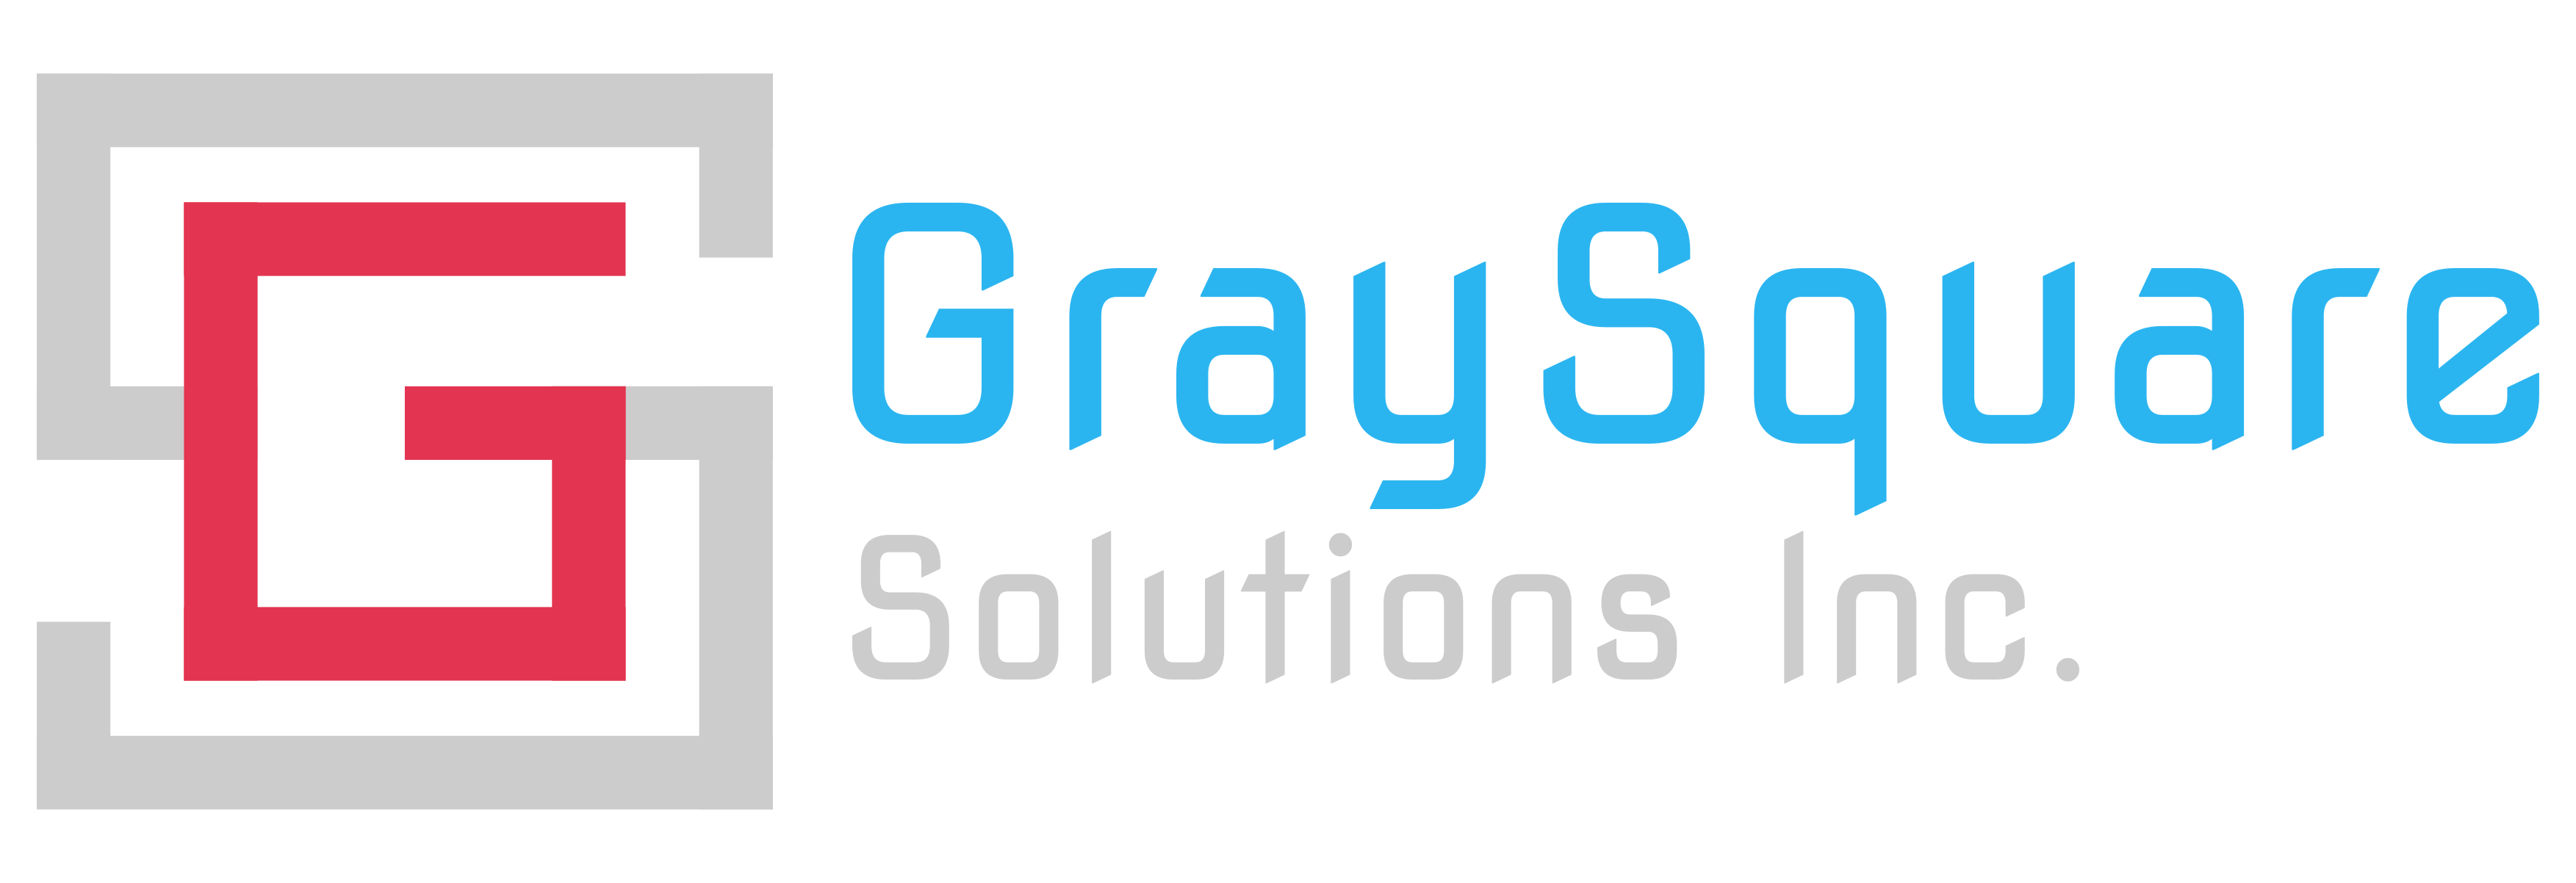 GraySquare Solutions Inc.